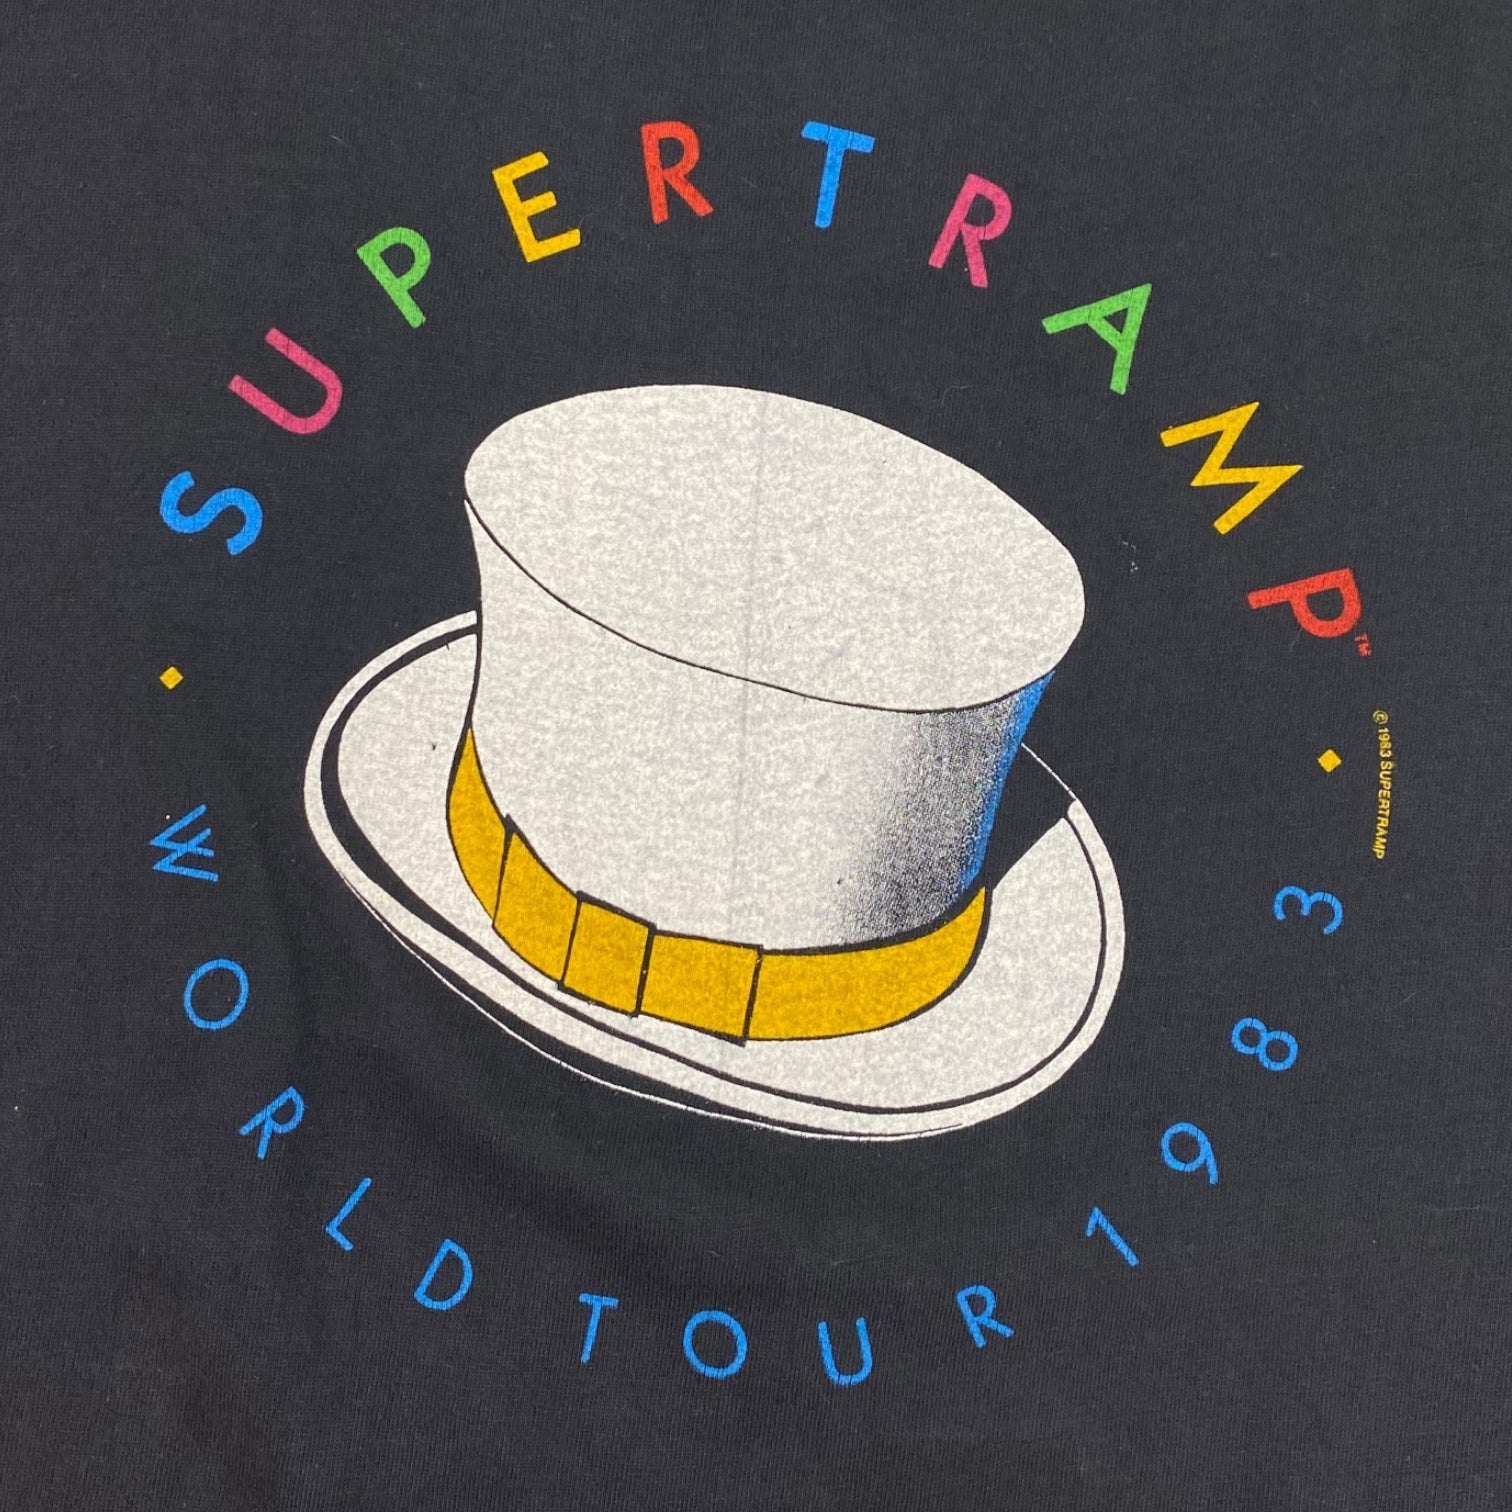 1983 Black Super Tramp '83 World Tour T-Shirt